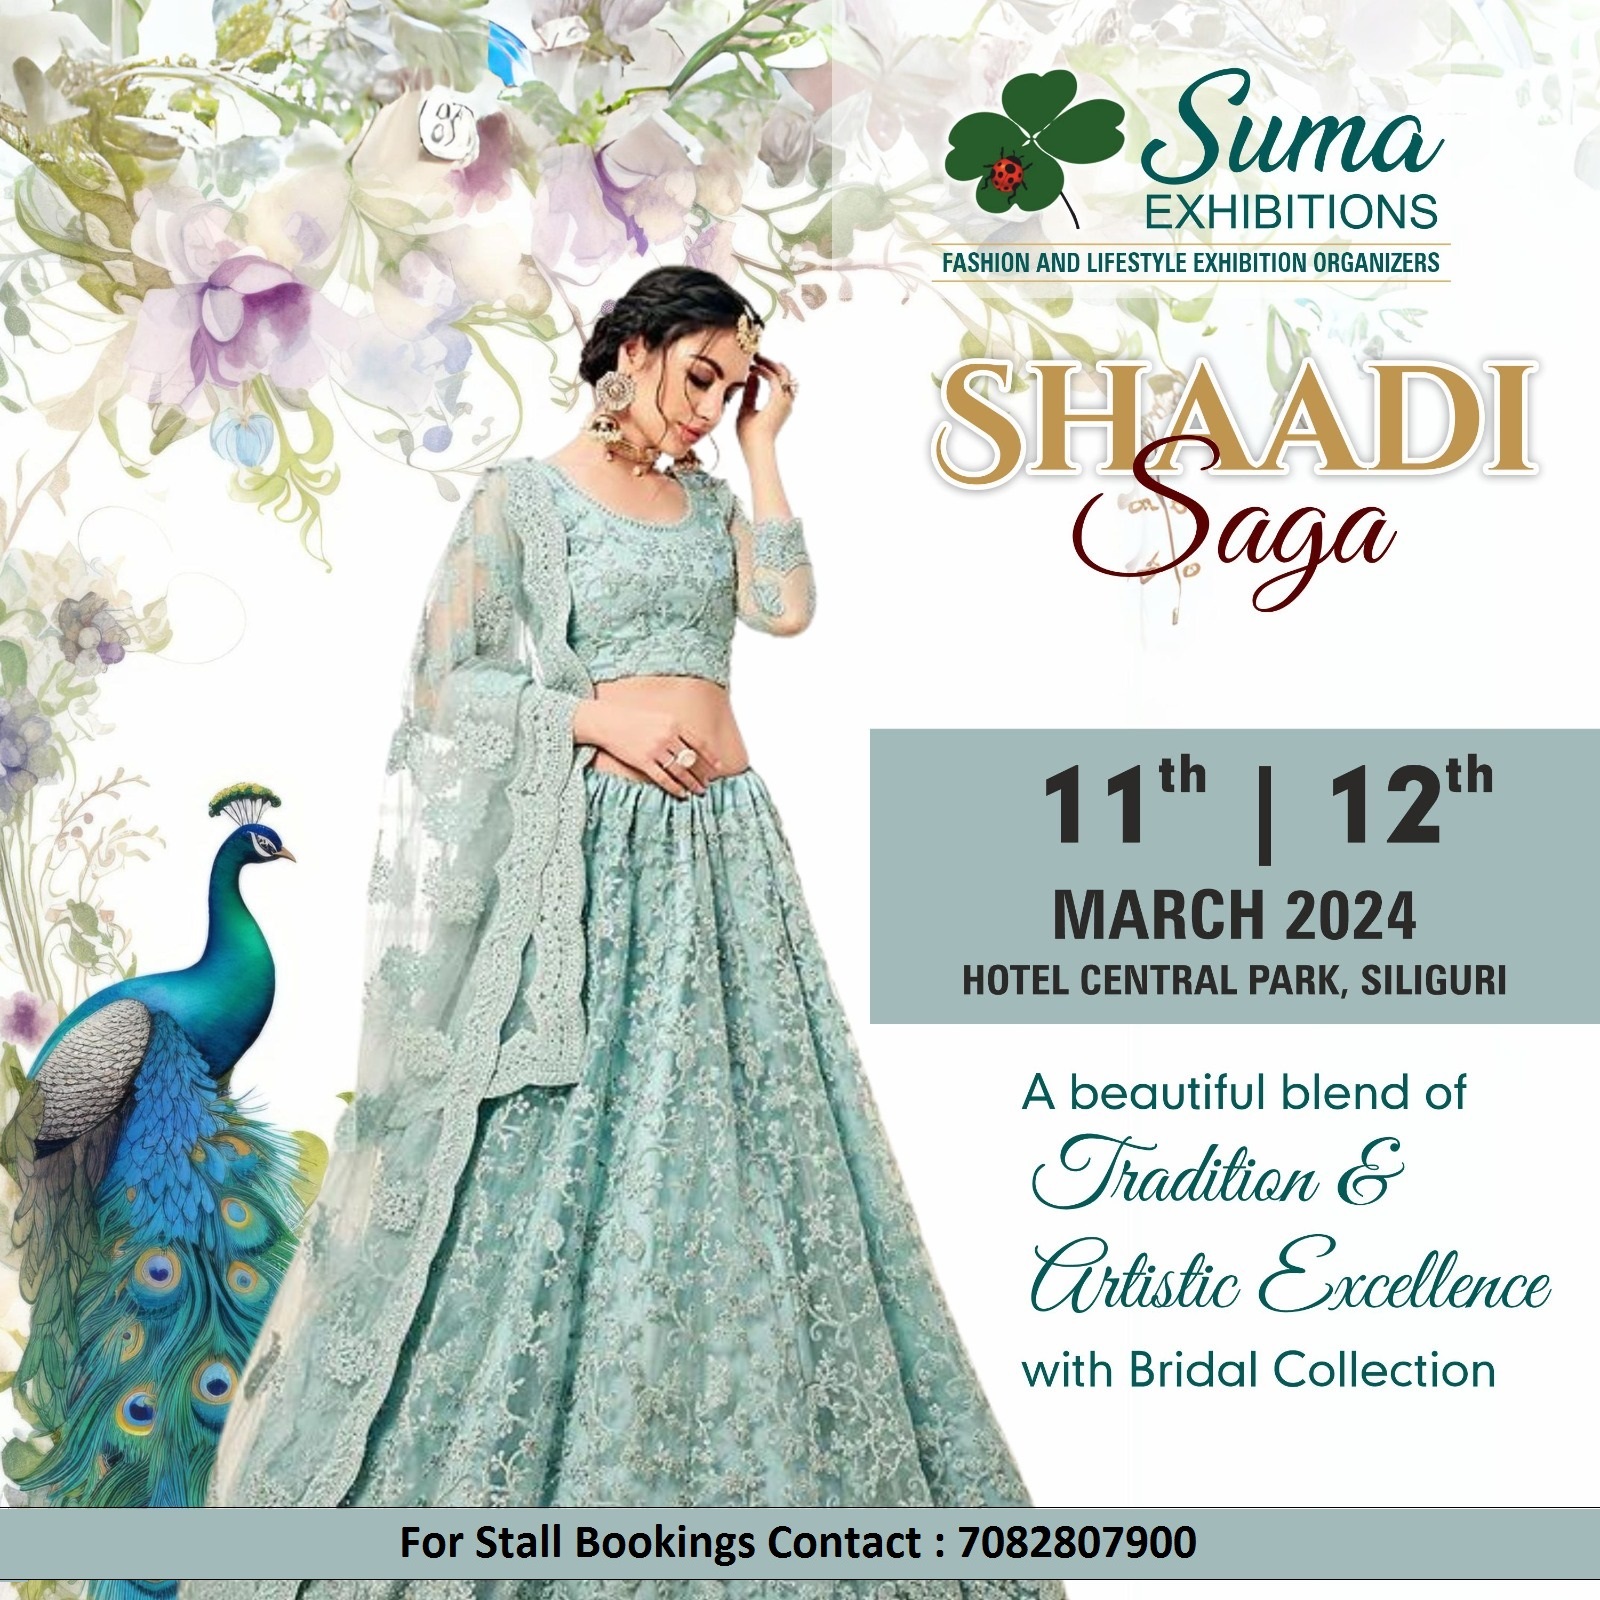 Shaadi Saga - Fashion & Lifestyle Exhibition